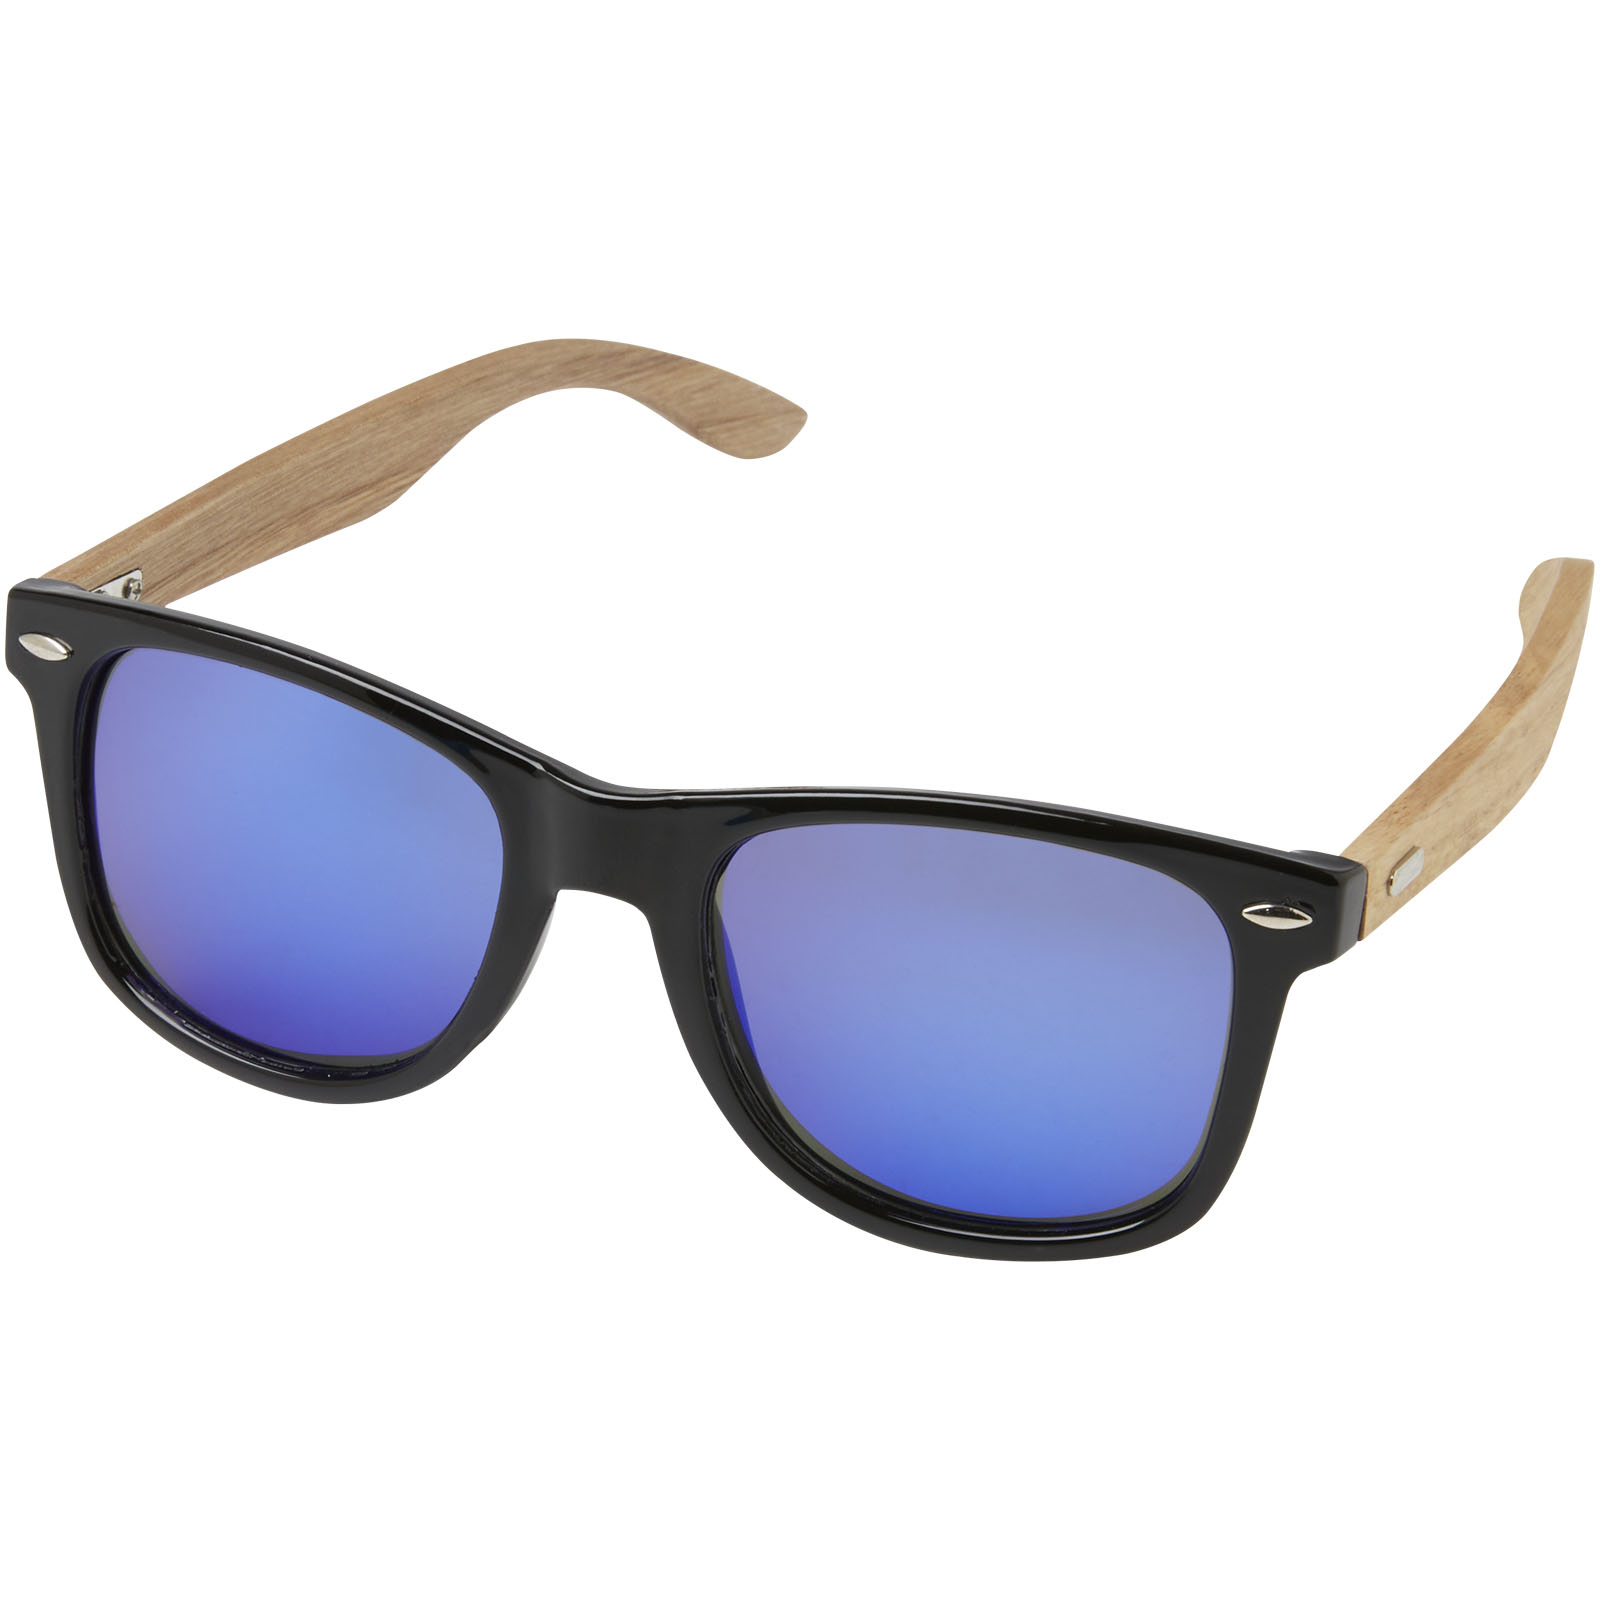 Sunglasses - Hiru rPET/wood mirrored polarized sunglasses in gift box